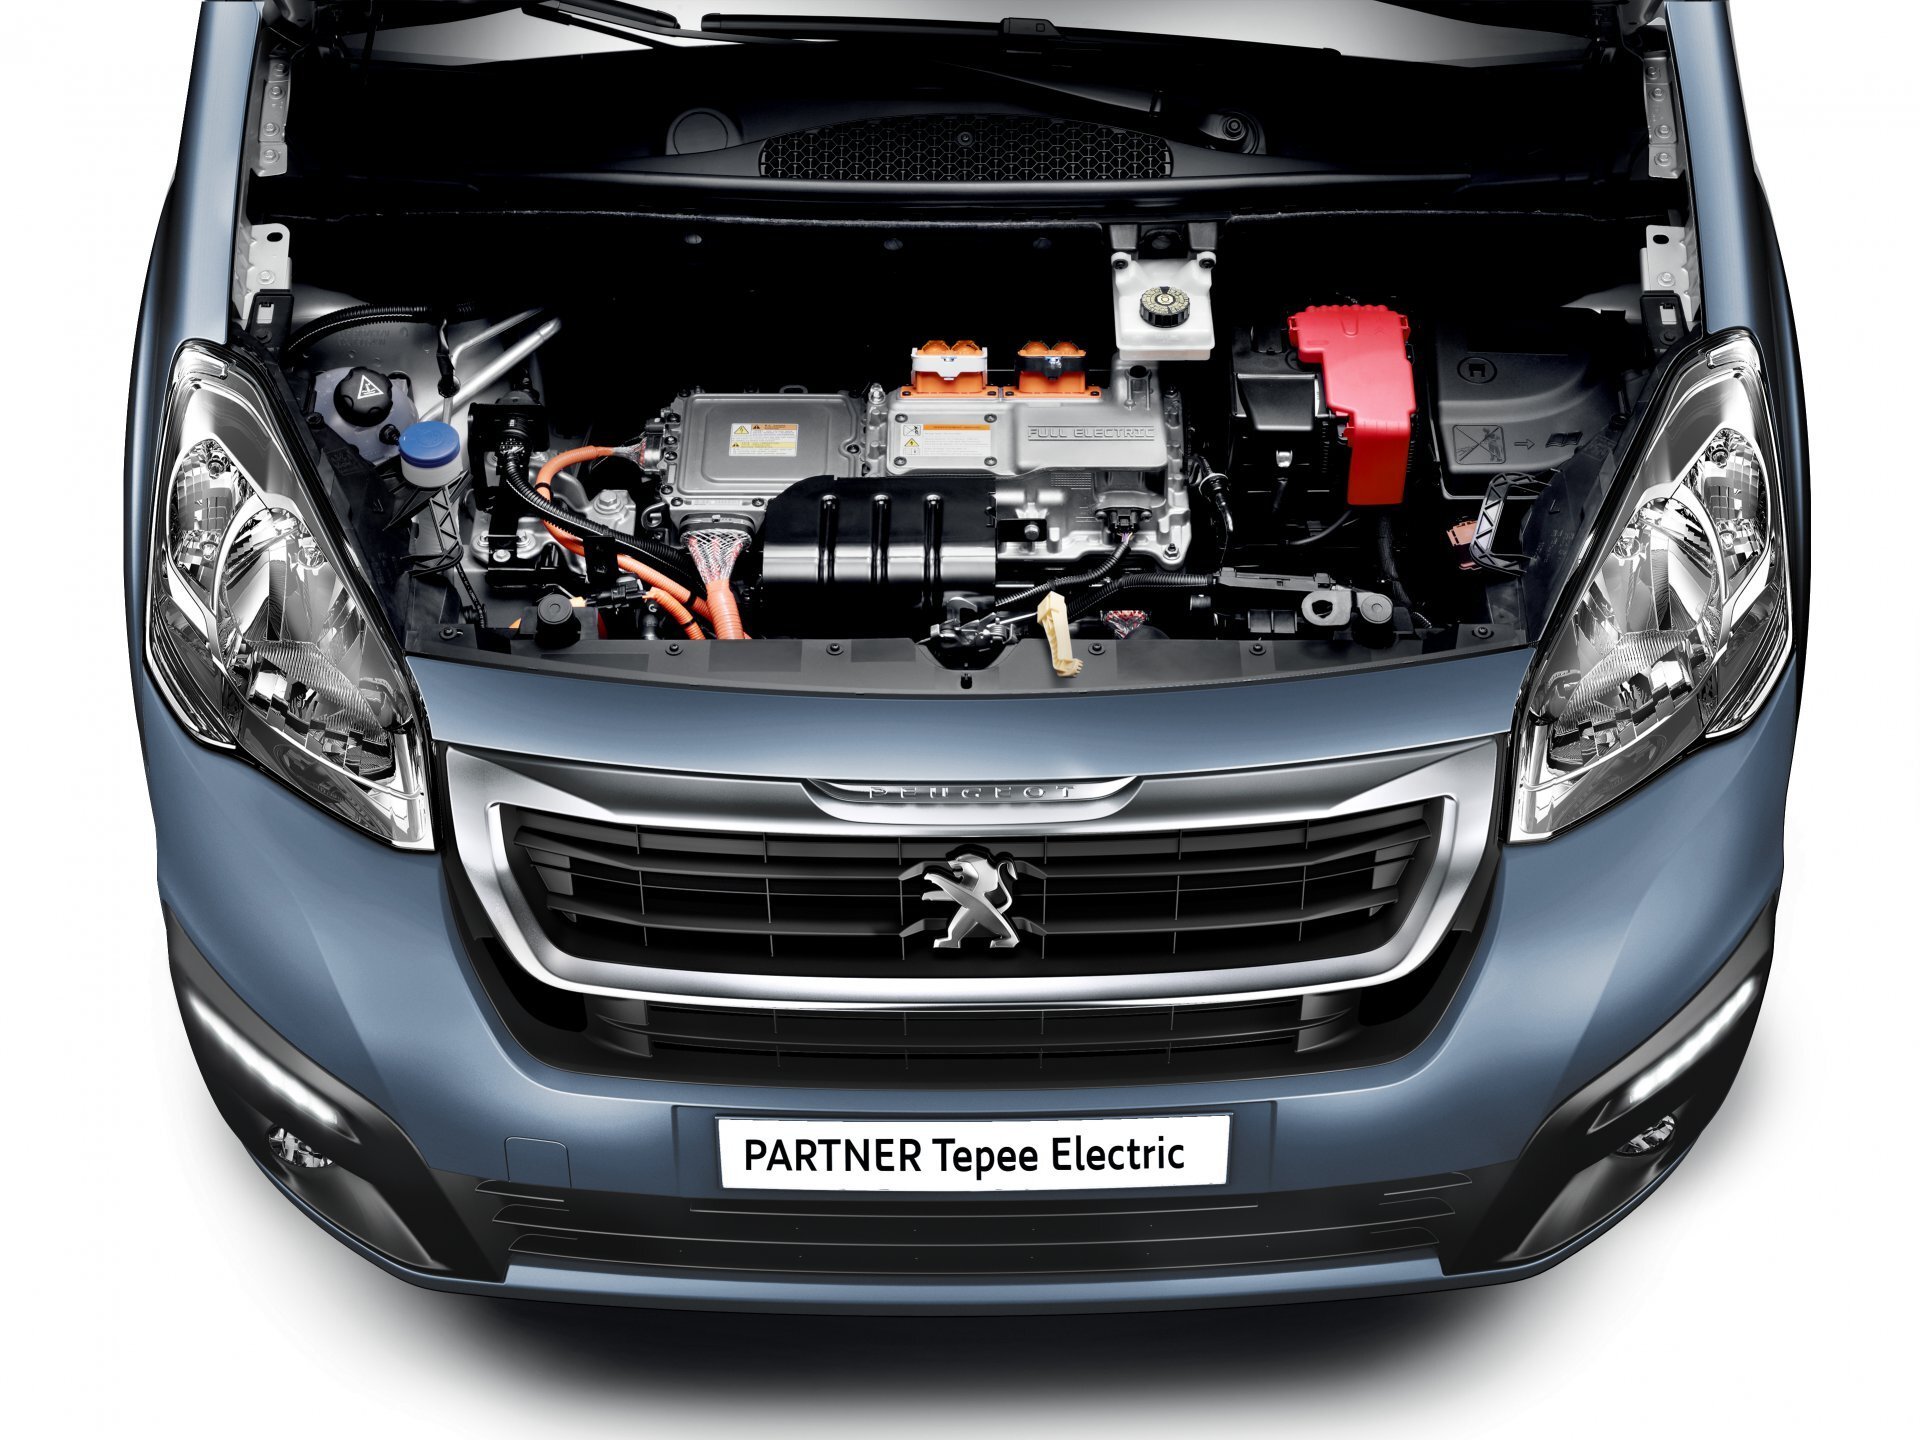 Peugeot Tepee Partner Electric (2017)